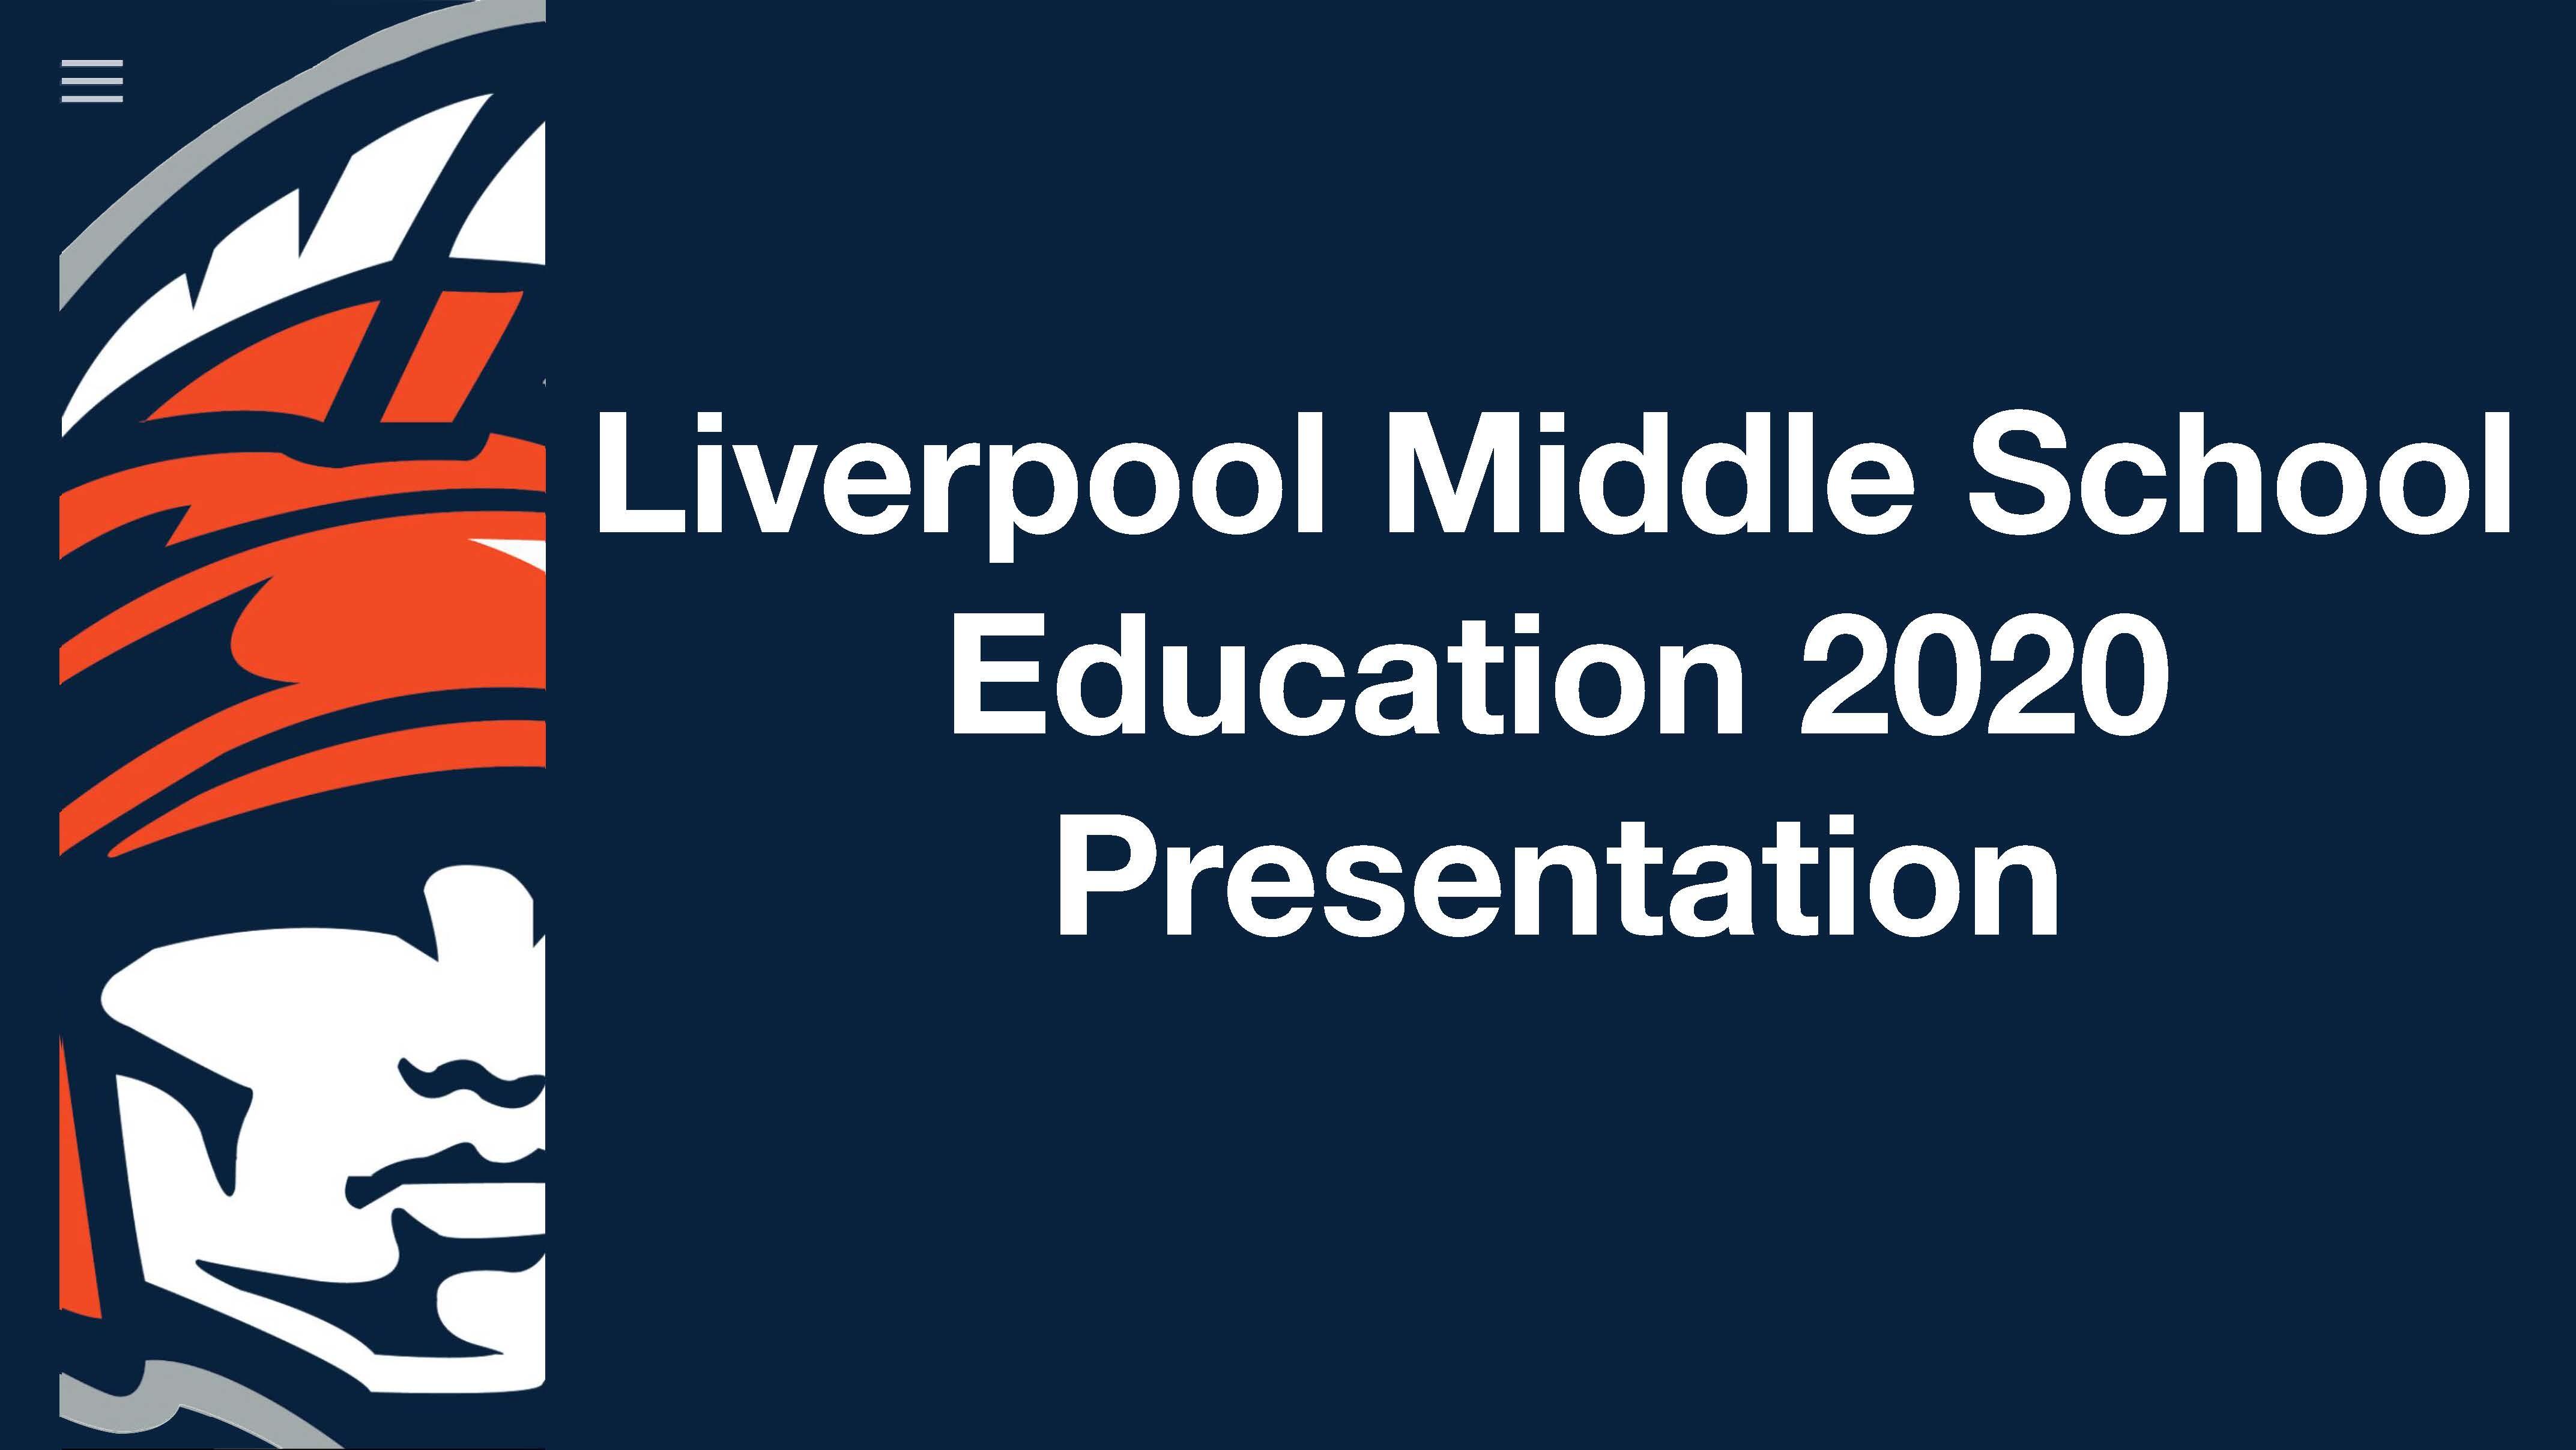 Liverpool Middle School Education 2020 Presentation